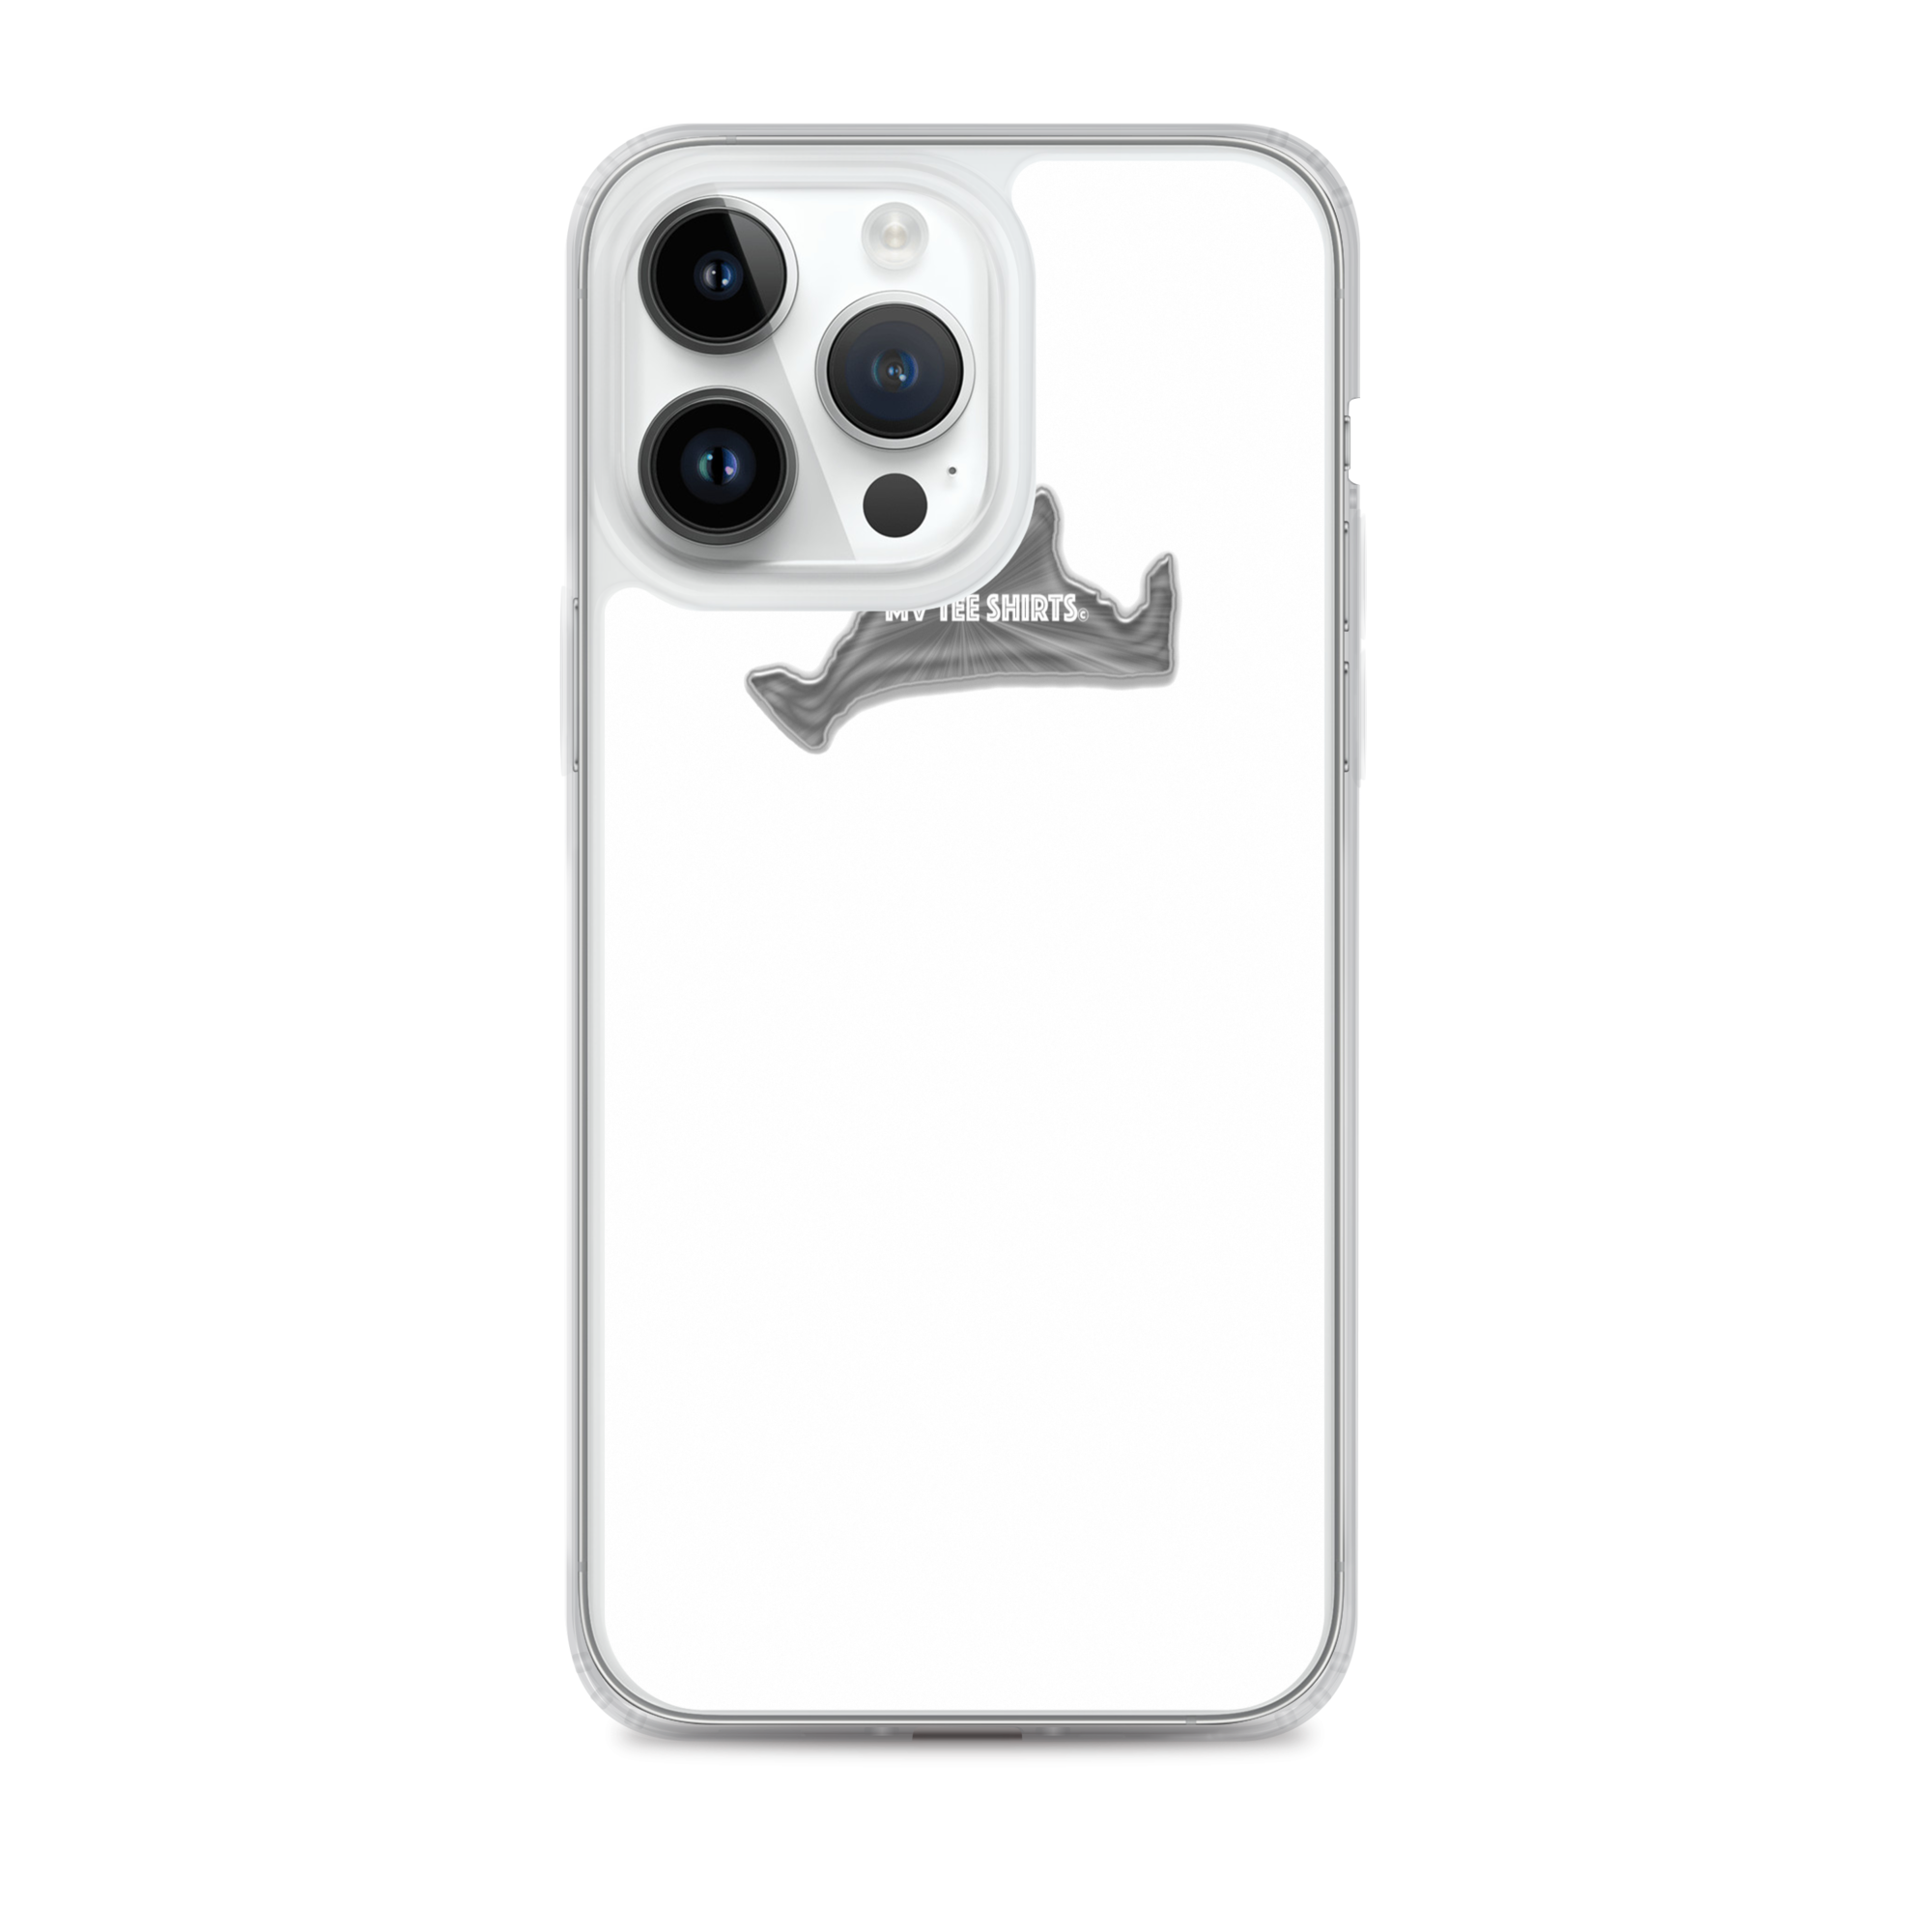 Monochrome-iPhone Case